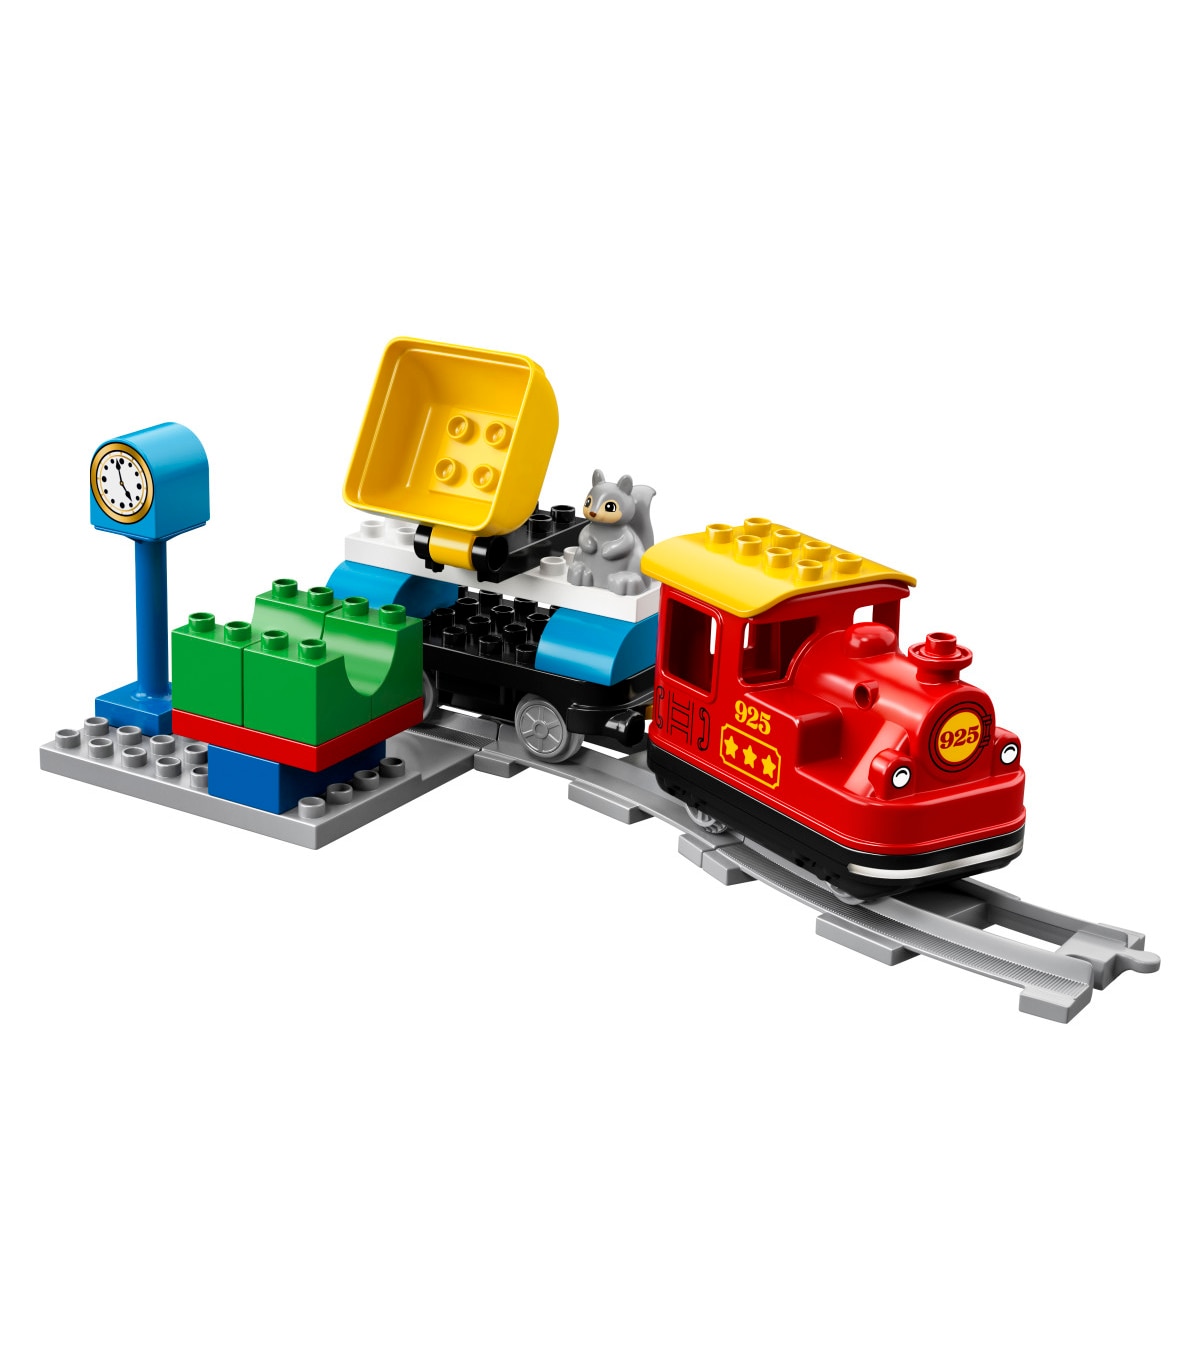 lego duplo steam train set 10874